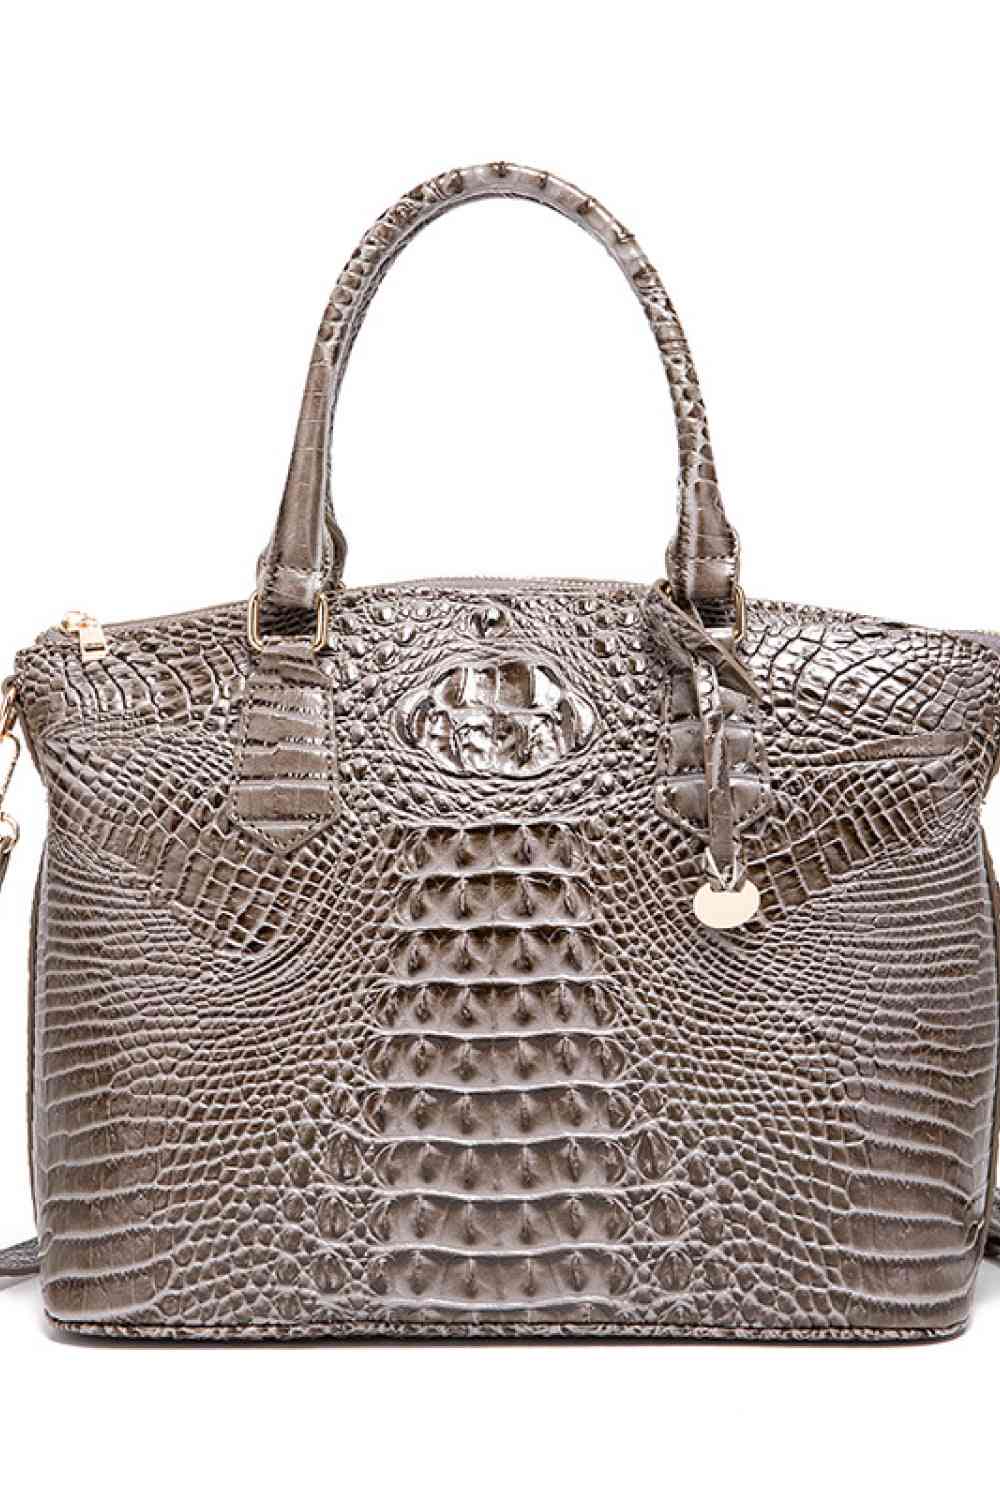 TEEK - Scheduled Style Handbag BAG TEEK Trend   